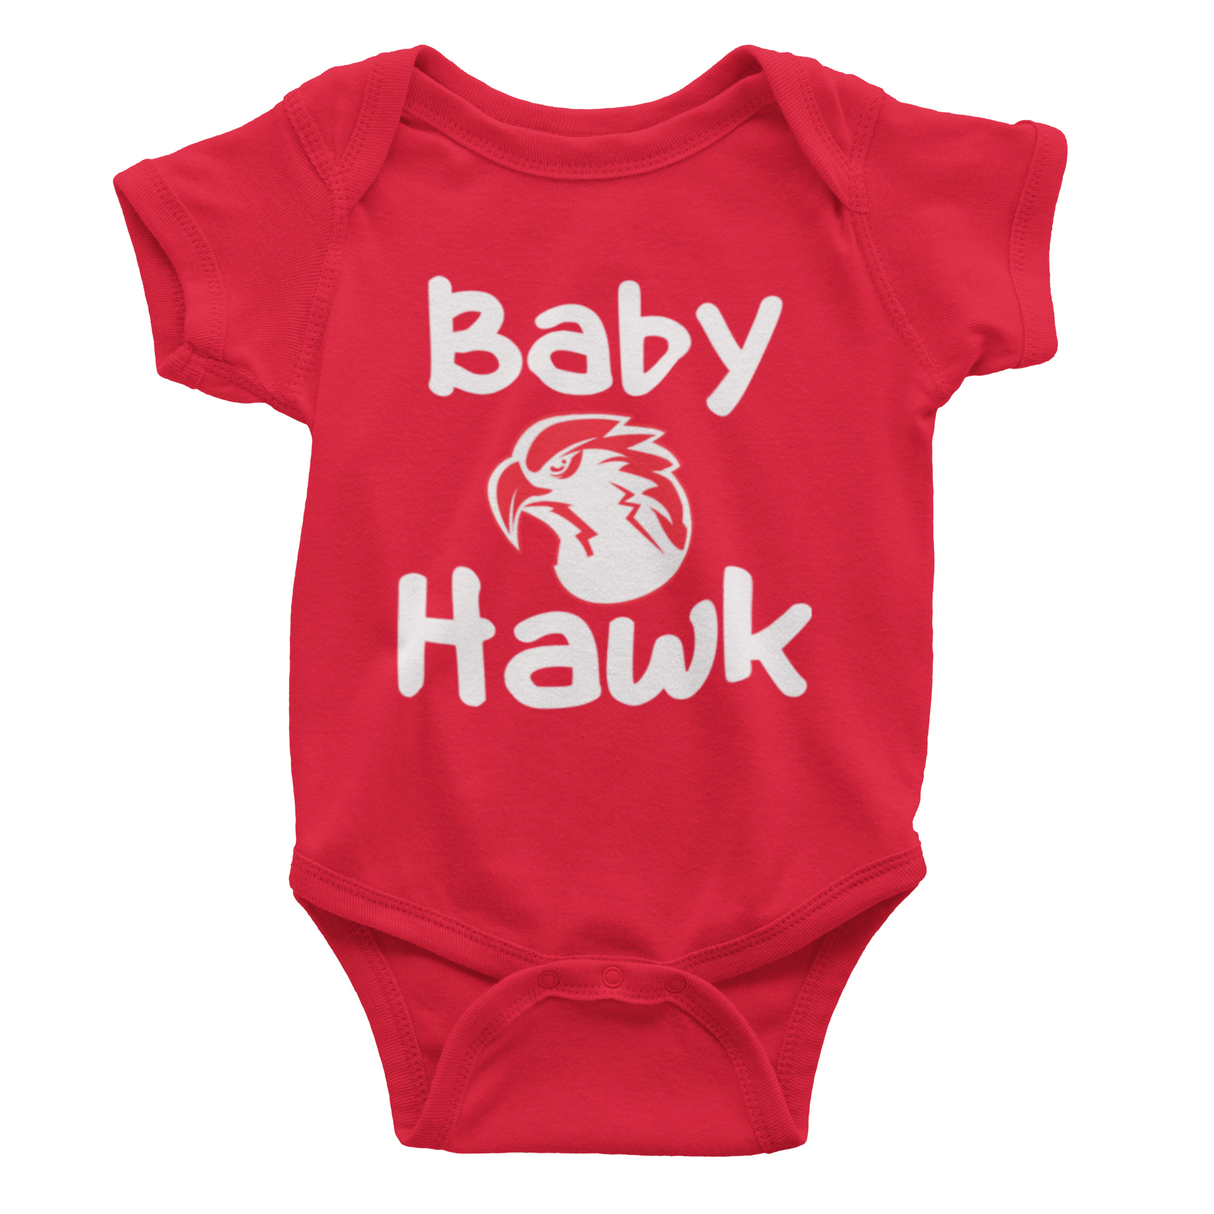 Baby Hawk Onesie